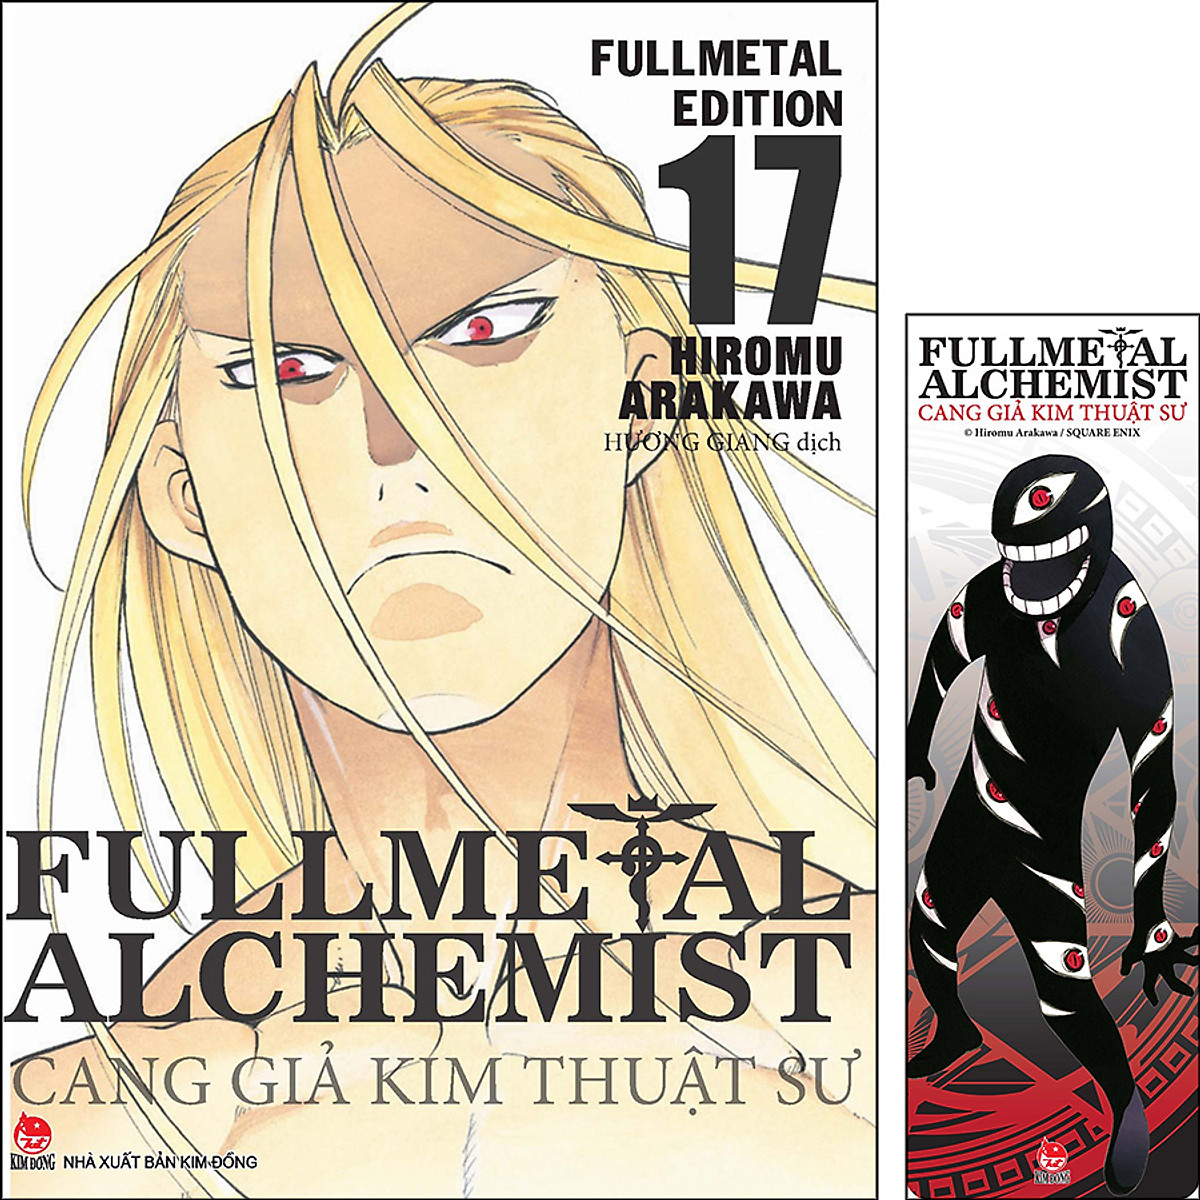 Fullmetal Alchemist - Cang Giả Kim Thuật Sư - Fullmetal Edition Tập 17 [Tặng Kèm Bookmark PVC]